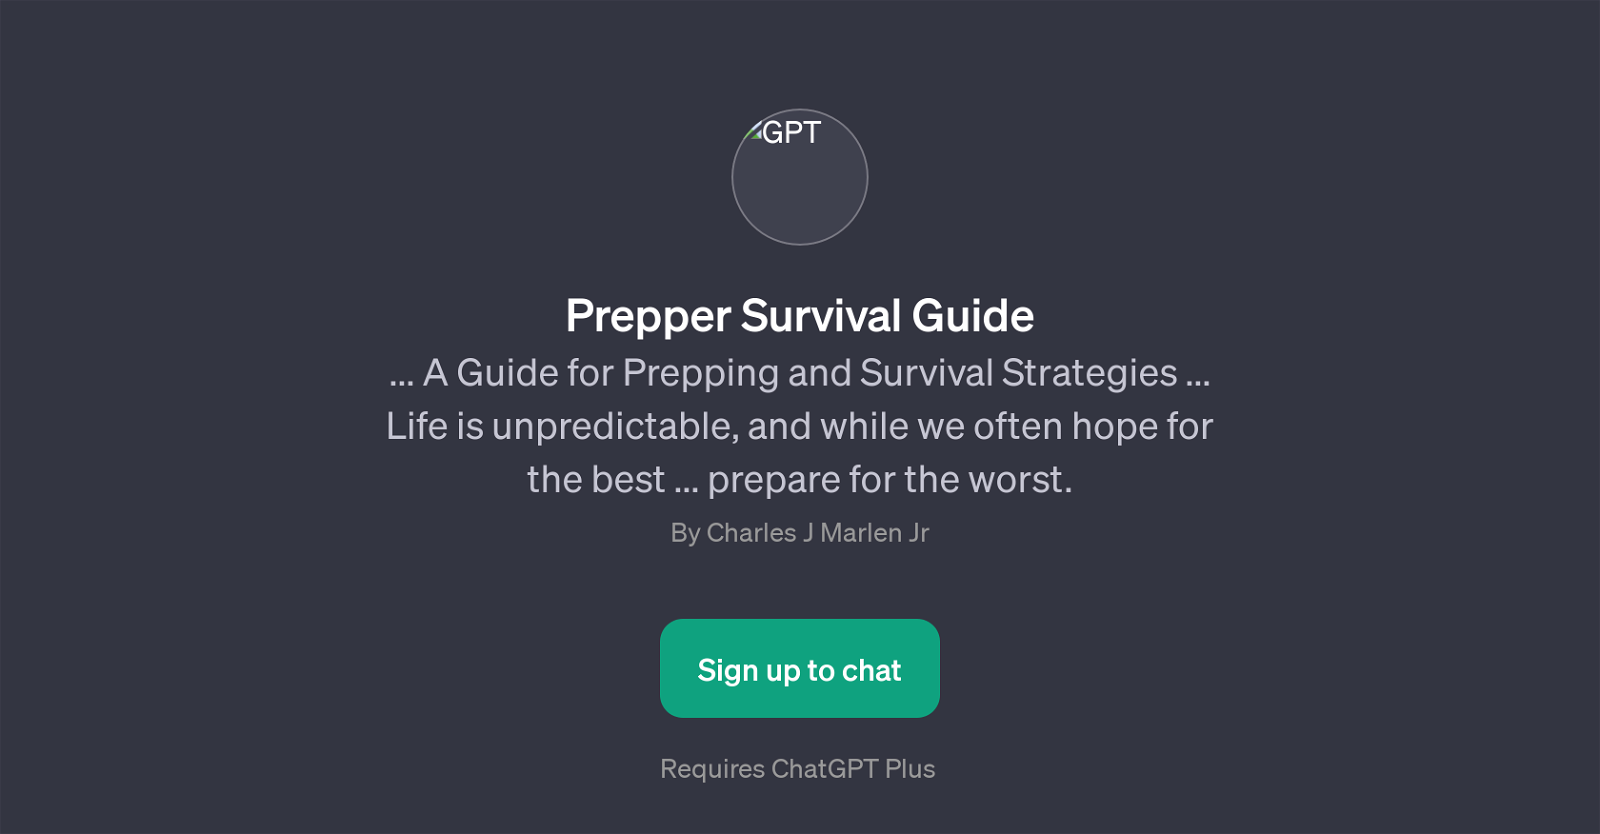 Prepper Survival Guide website